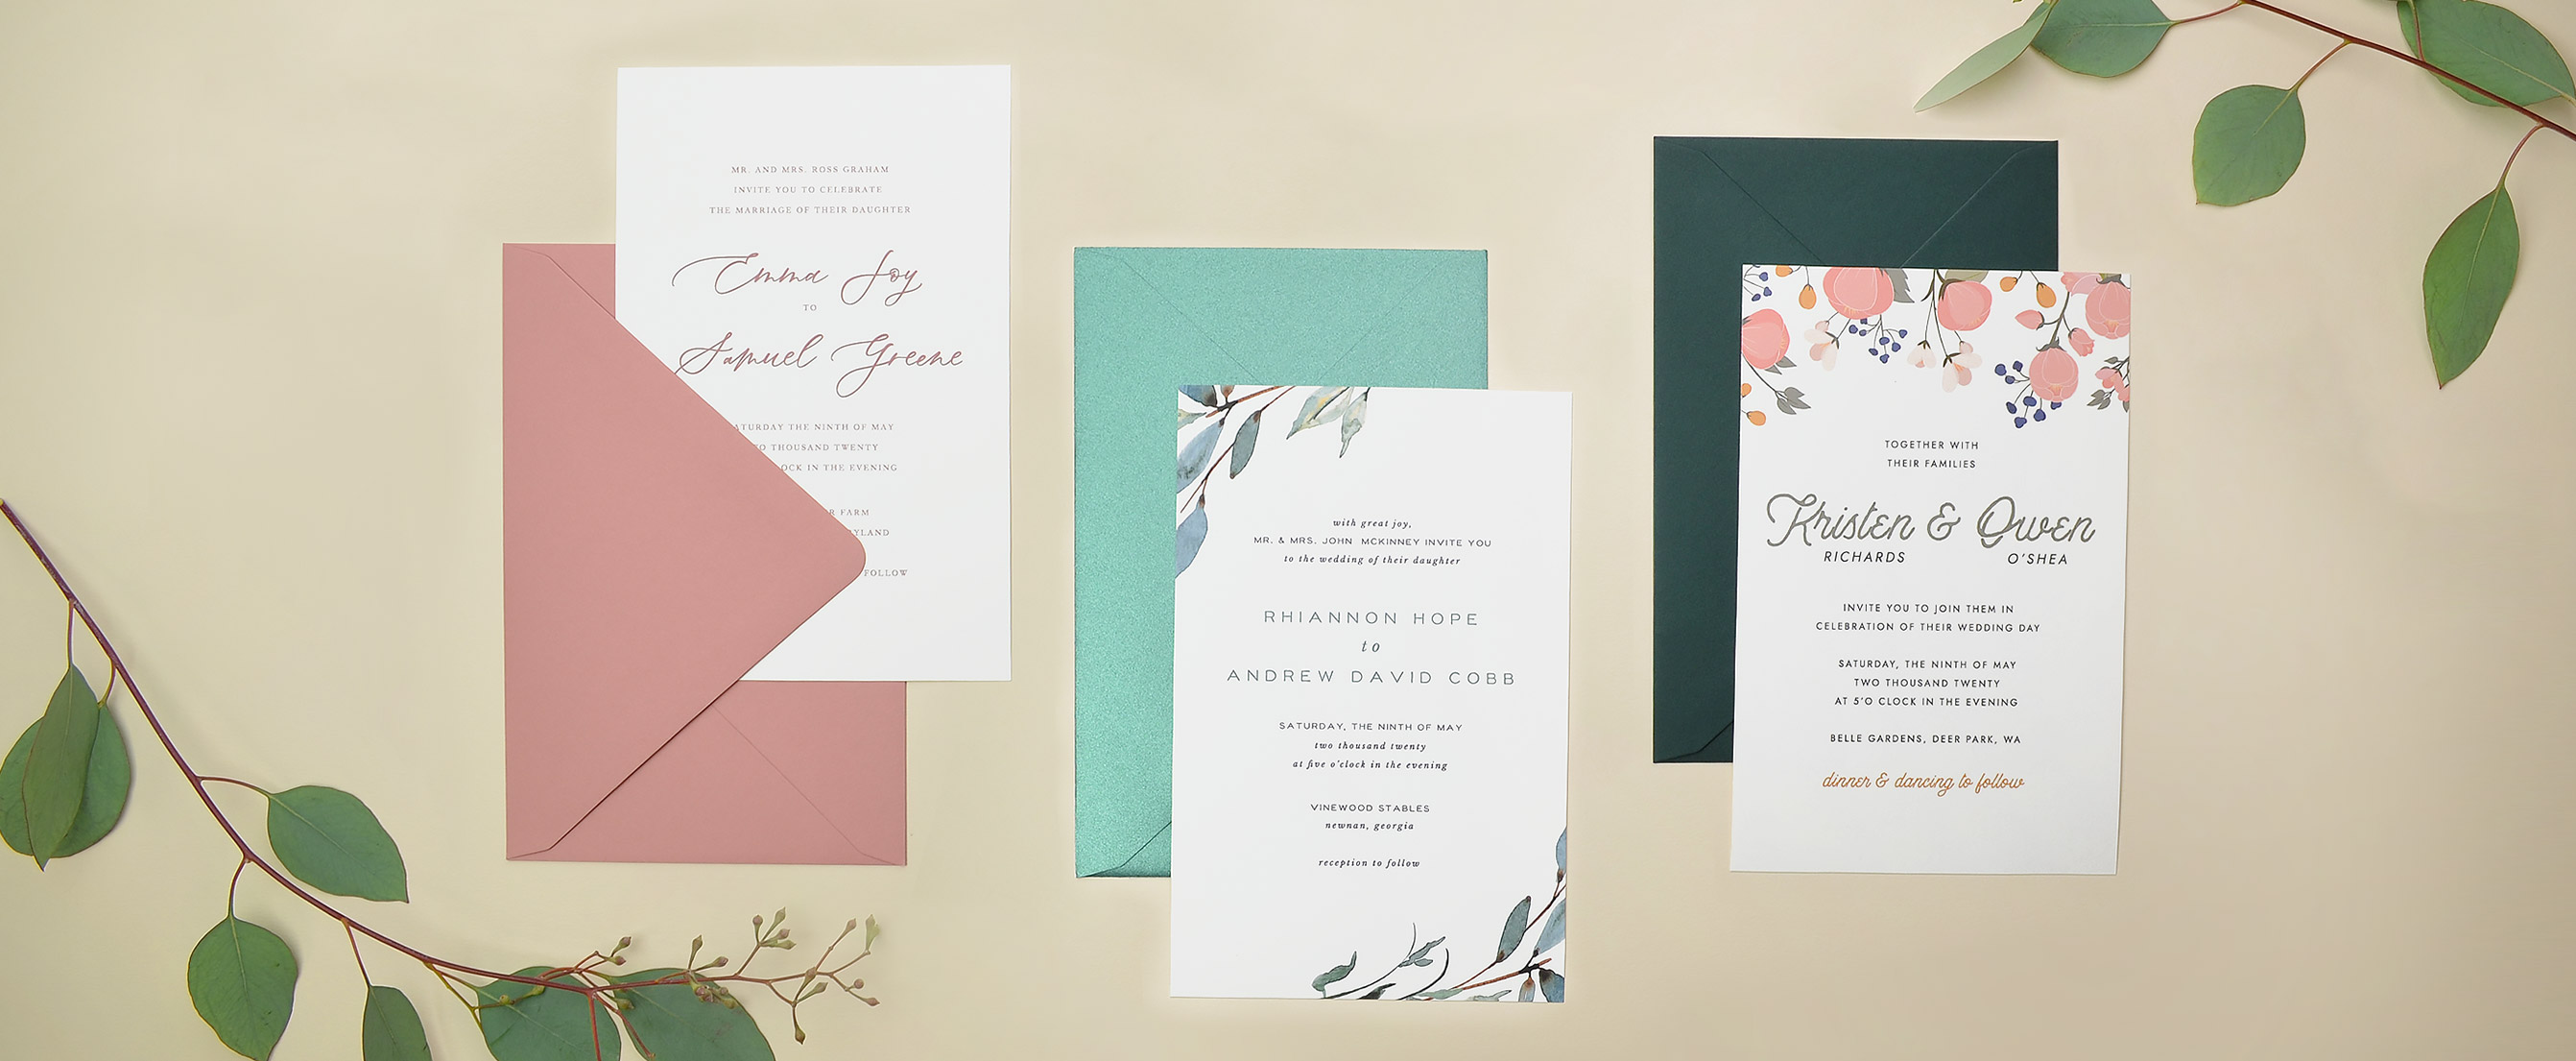 Bella vellum wedding invitation card SAMPLE with RSVP/wish card & envelope